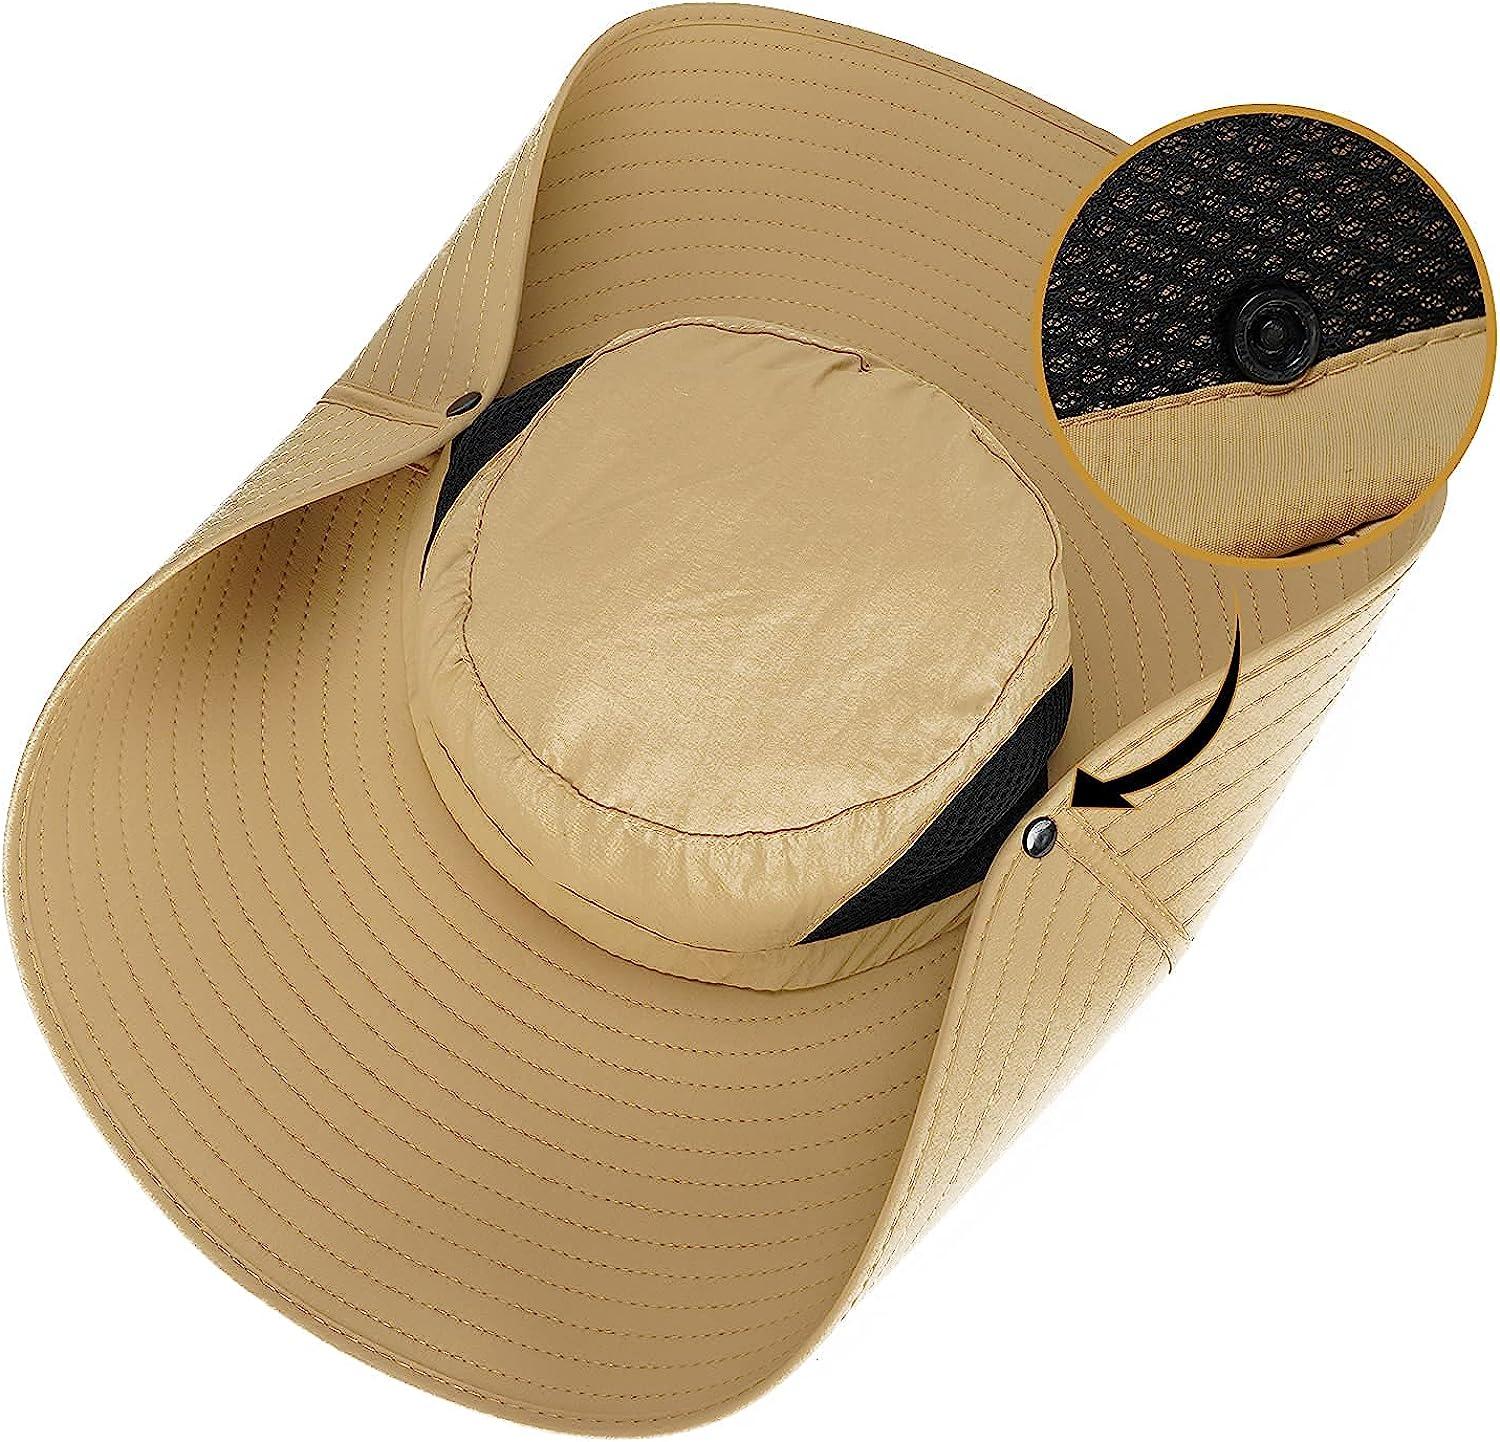 Leotruny Women Super Wide Brim Sun Hat UPF50+ Waterproof Bucket Hat for  Fishing, Hiking, Camping C02-light Grey